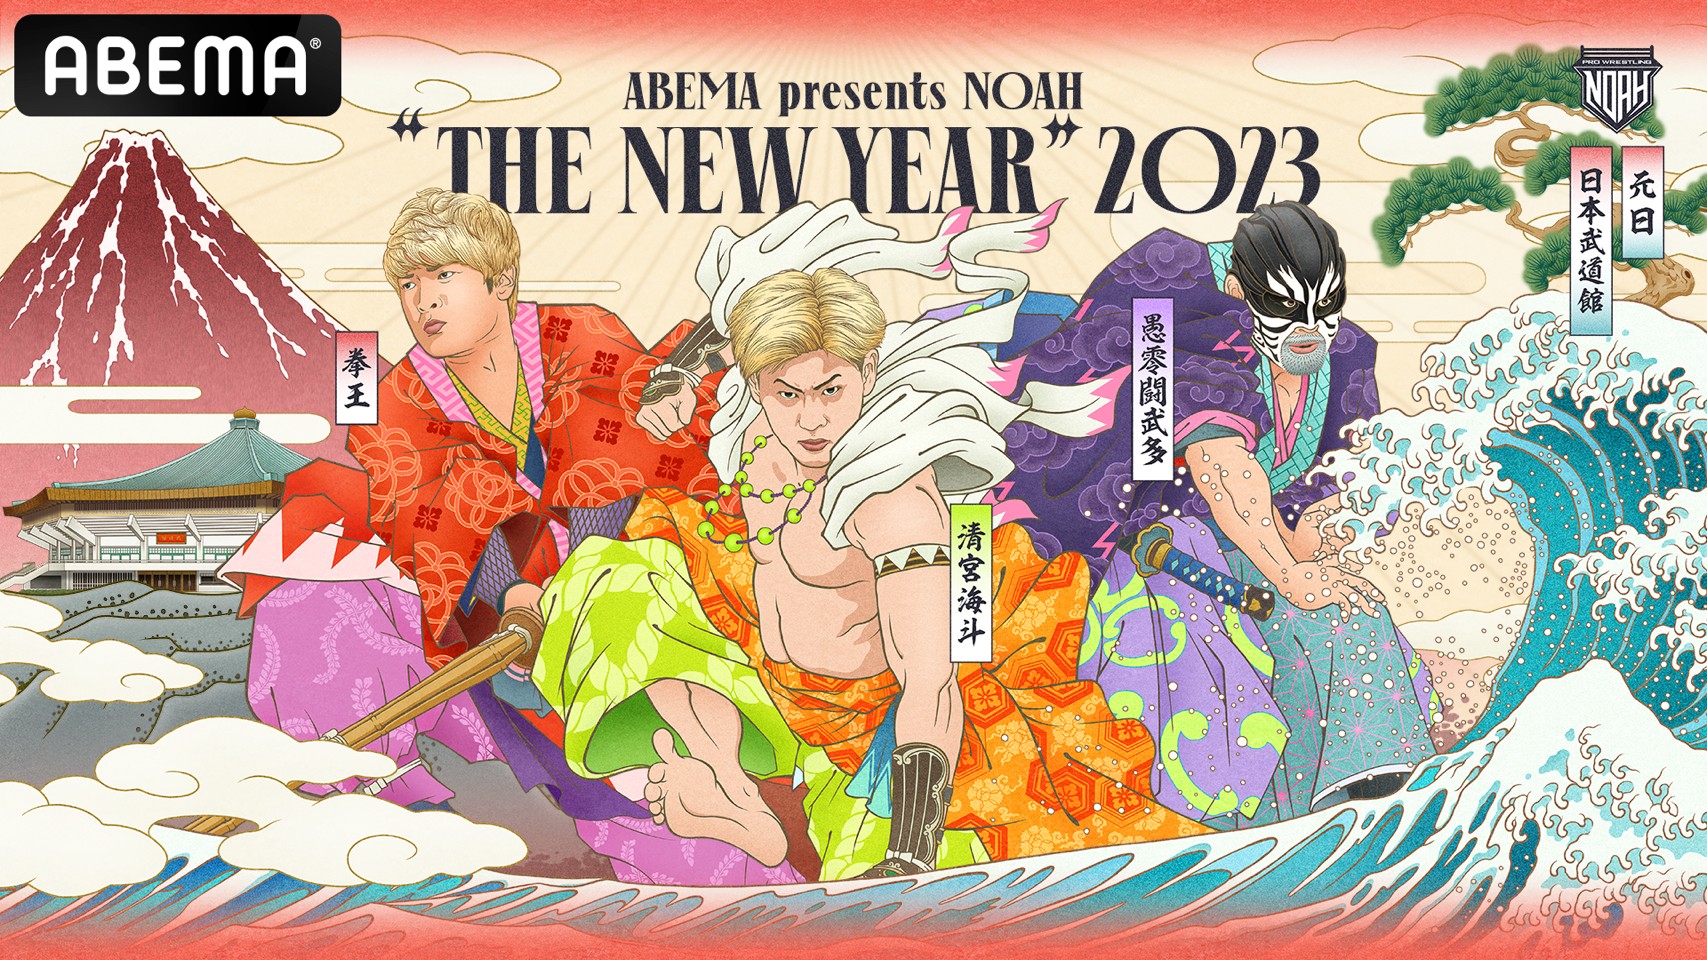 ABEMA presents NOAH THE NEW YEAR 2023